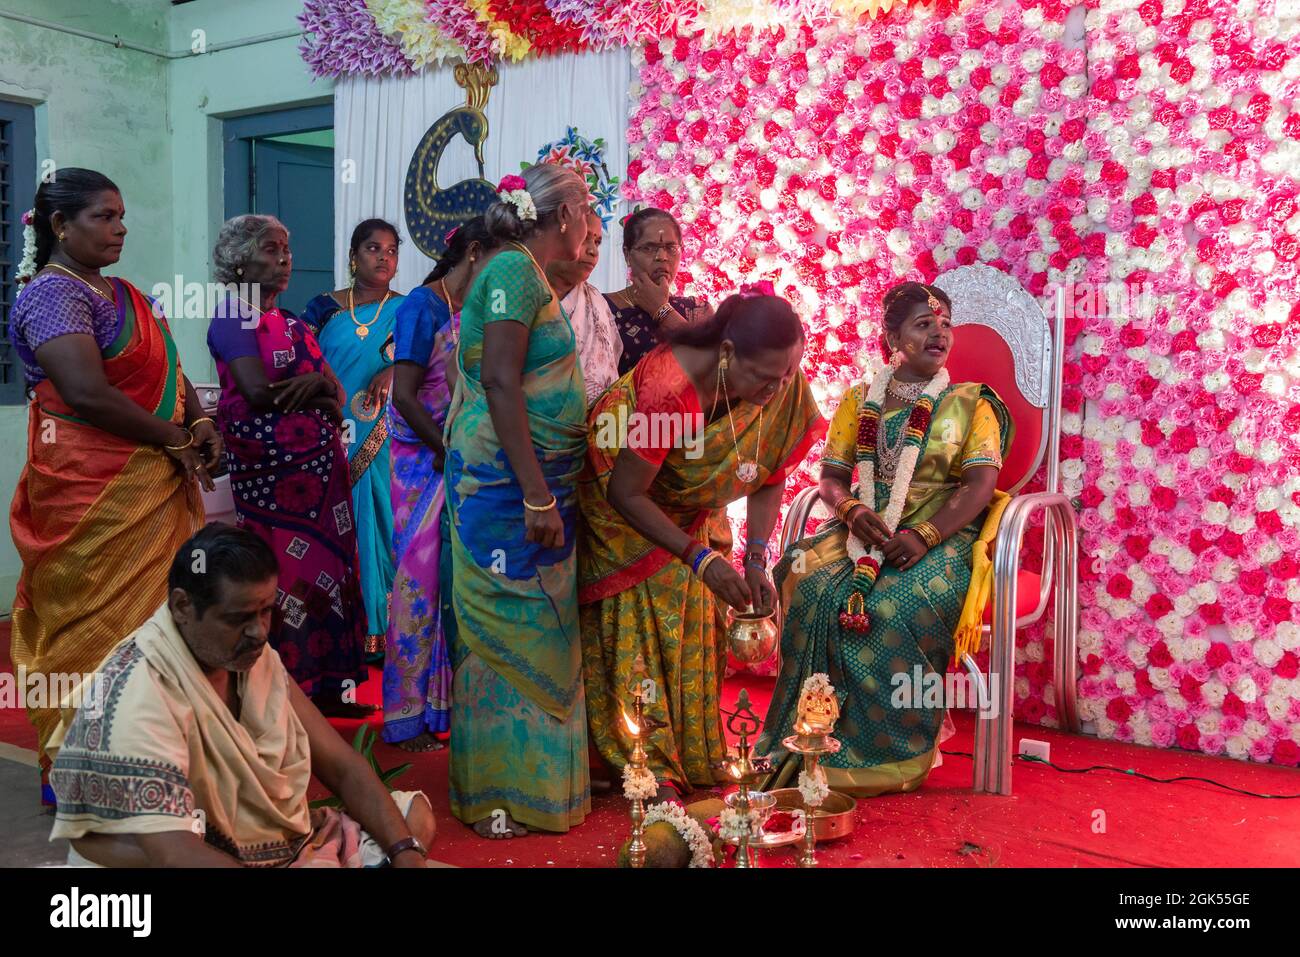 Tamil Nadu, India - 12th September 2021: The Ritushuddhi or Ritu Kala Samskara is the ceremony that celebrates a girl’s transition to womanhood. This Stock Photo